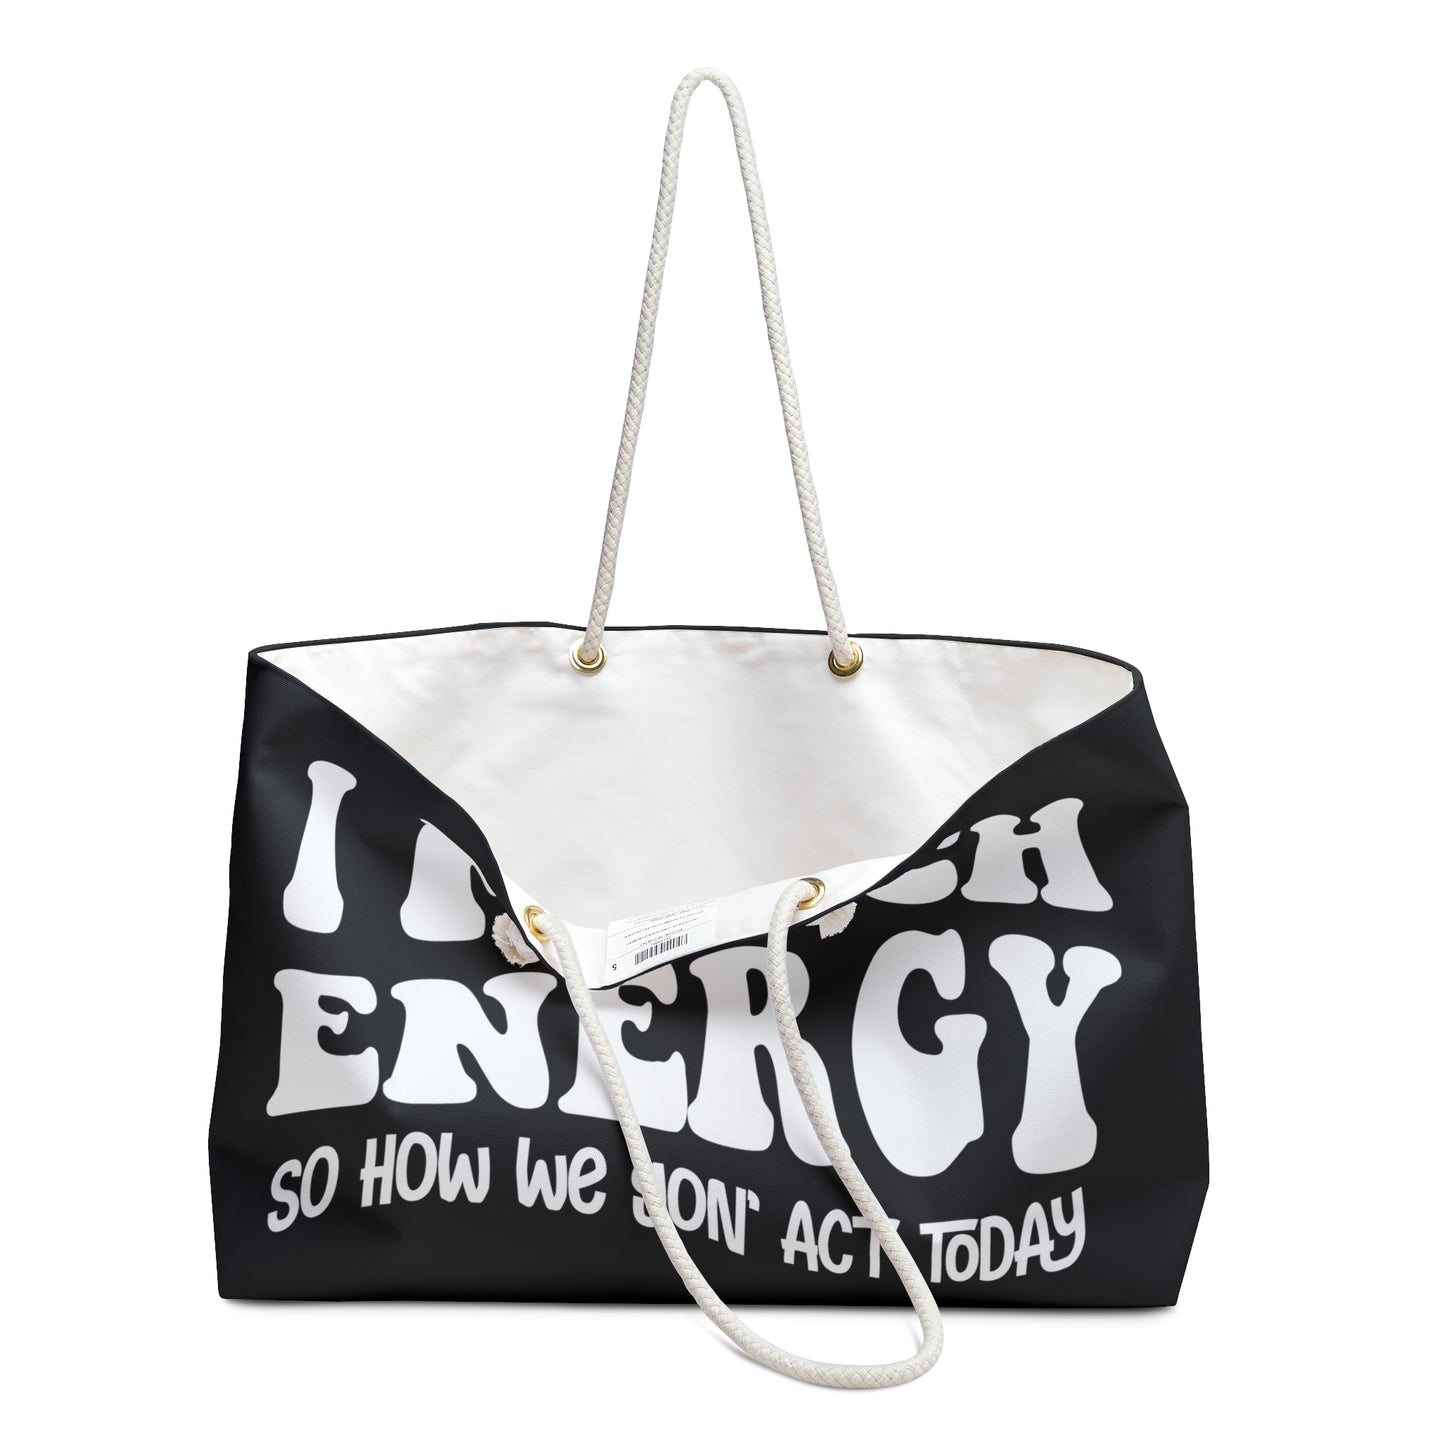 Match Energy Weekender Bag